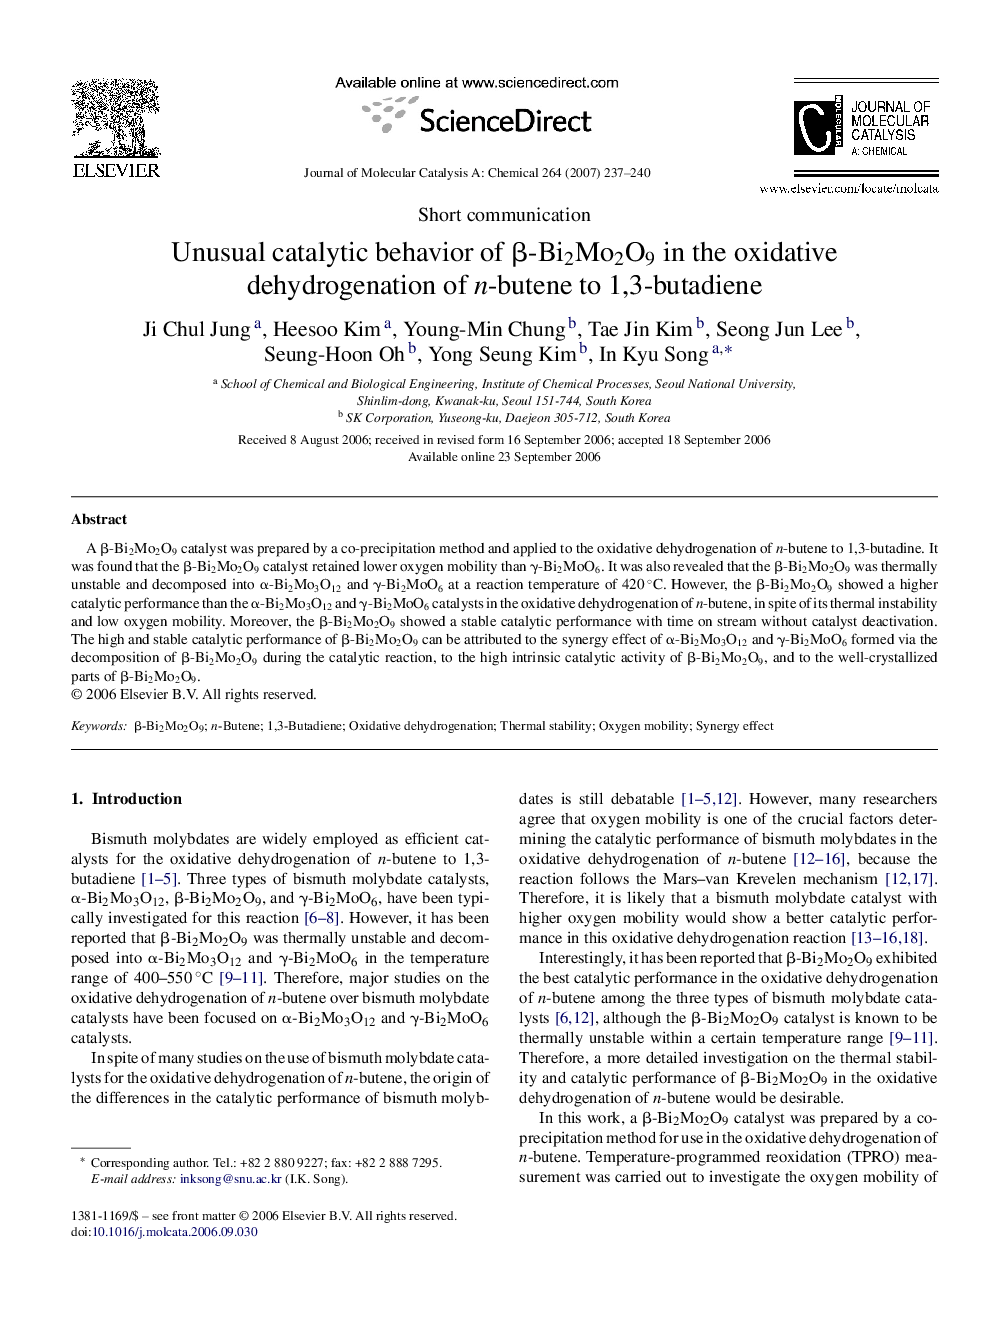 Unusual catalytic behavior of β-Bi2Mo2O9 in the oxidative dehydrogenation of n-butene to 1,3-butadiene